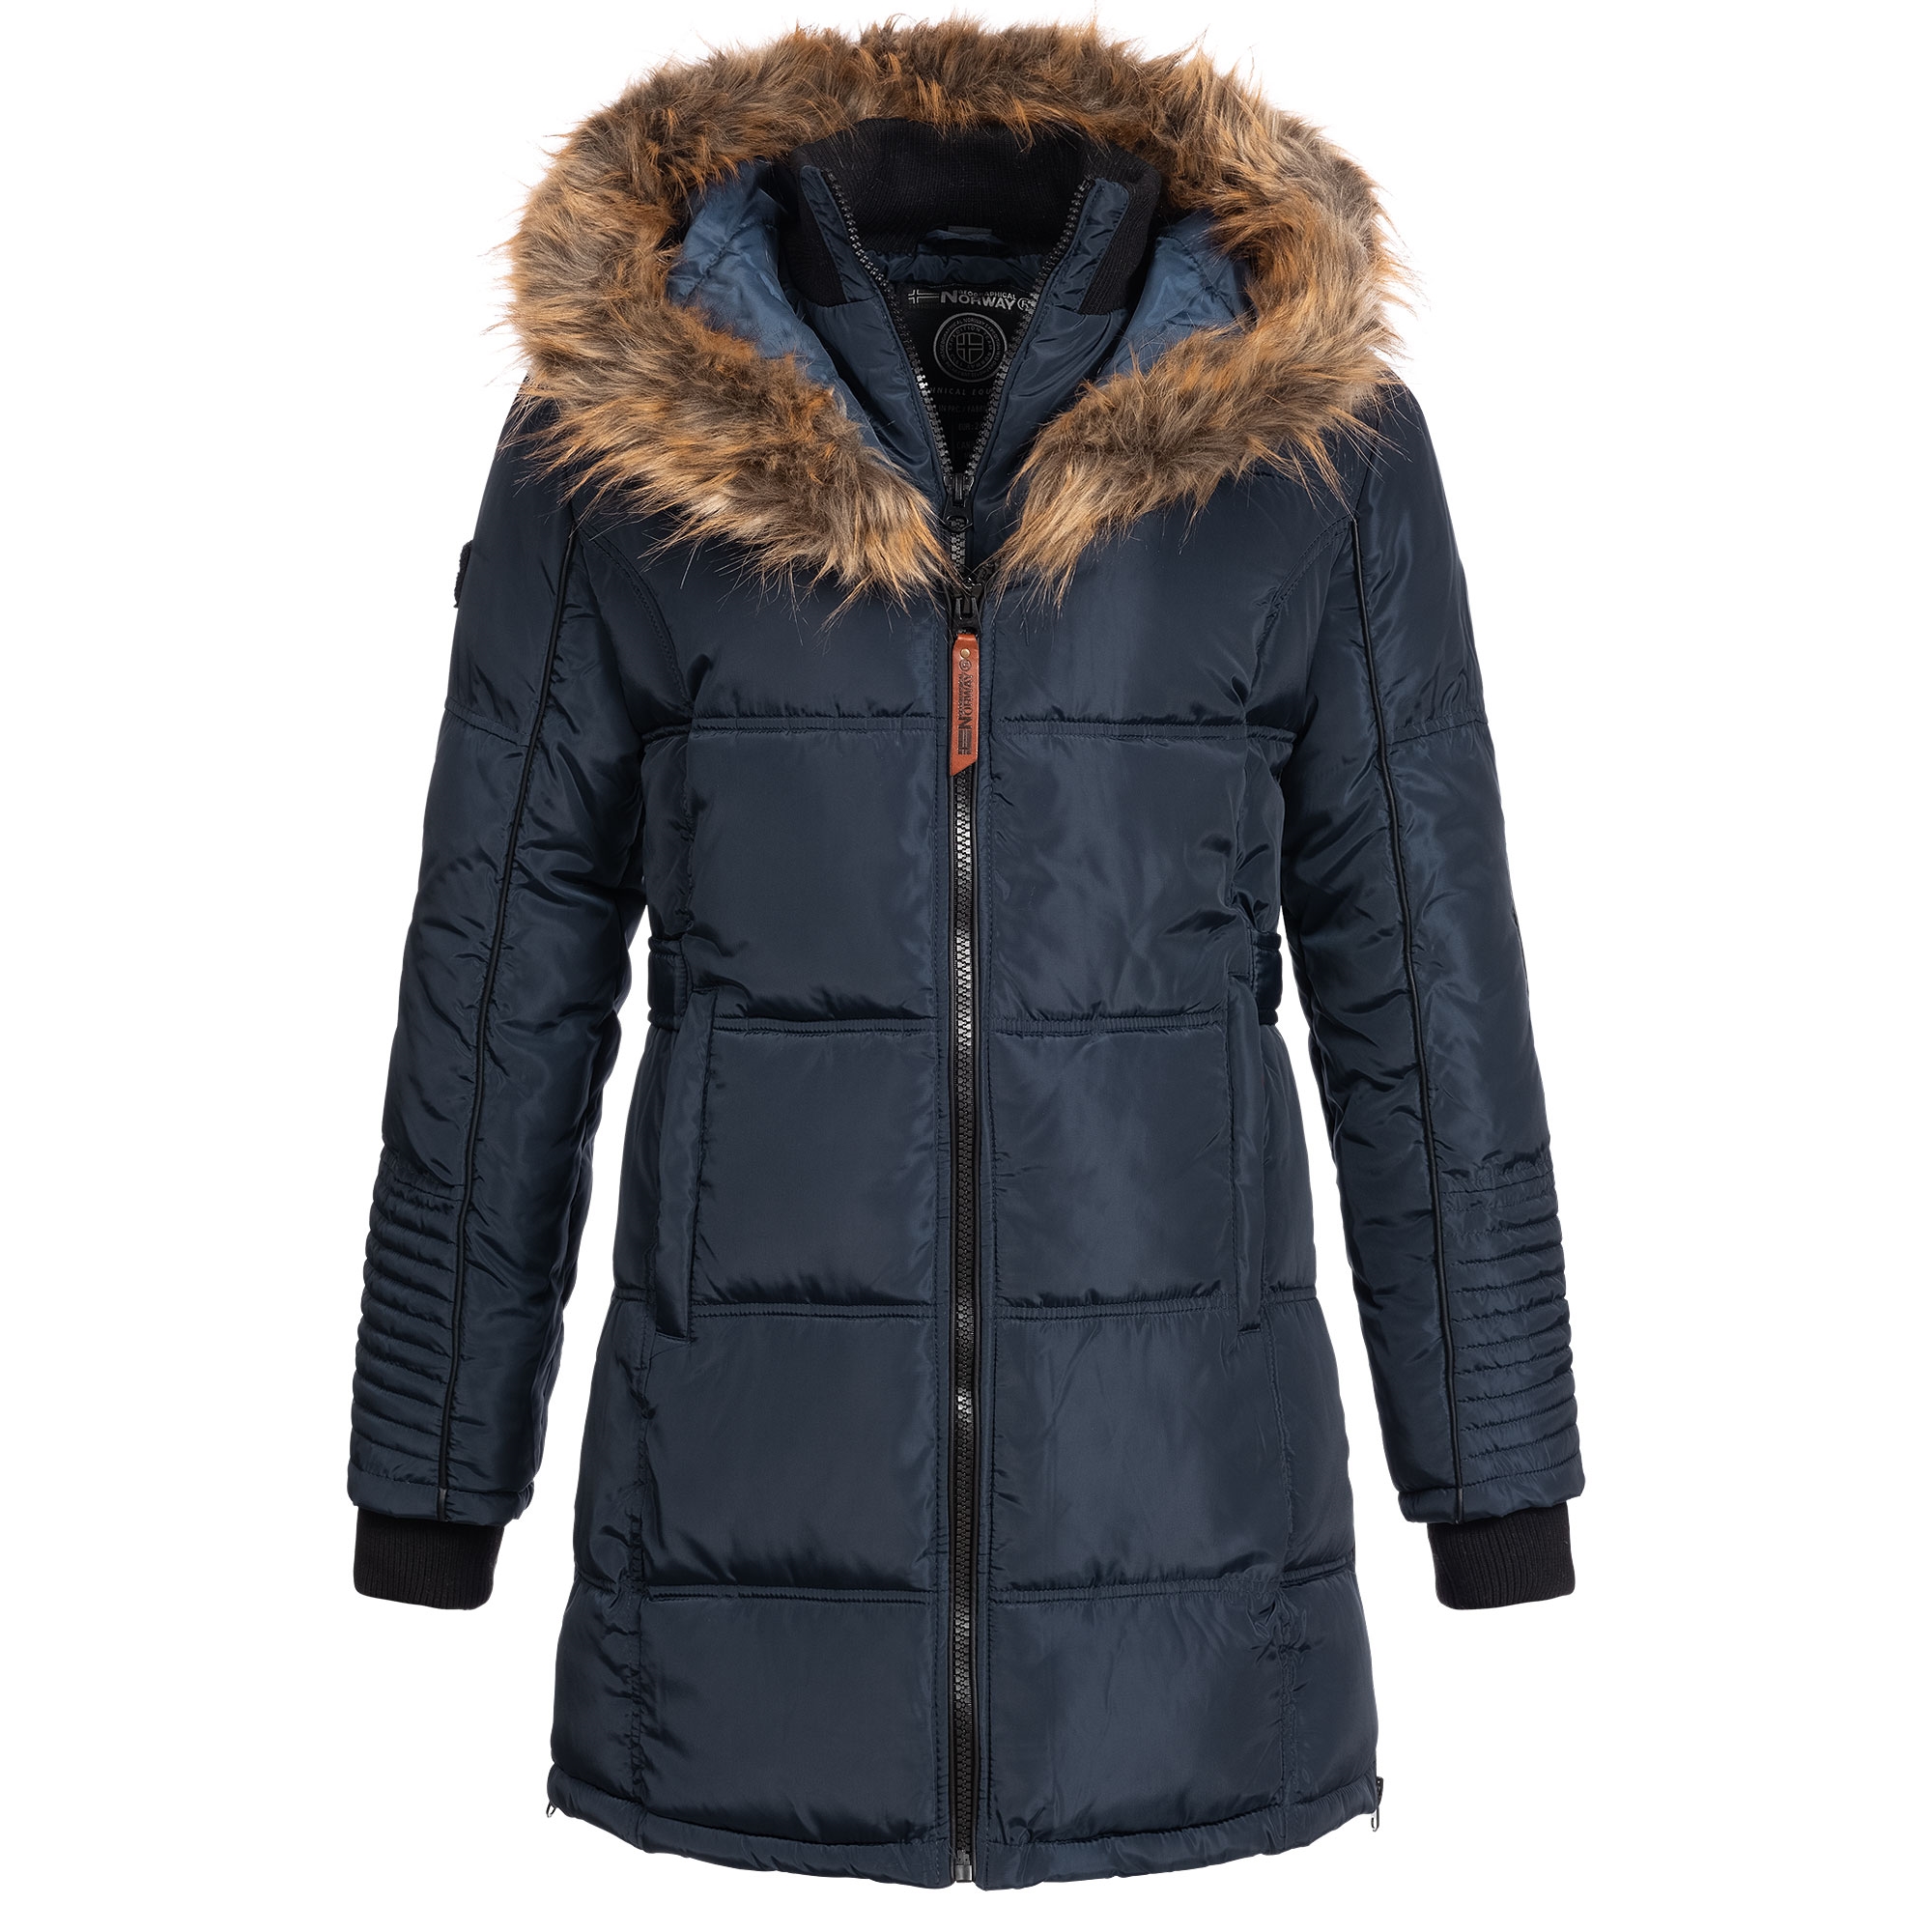 Geographical Norway Jacket Ladies Winter Jacket Winter Coat Parka ...